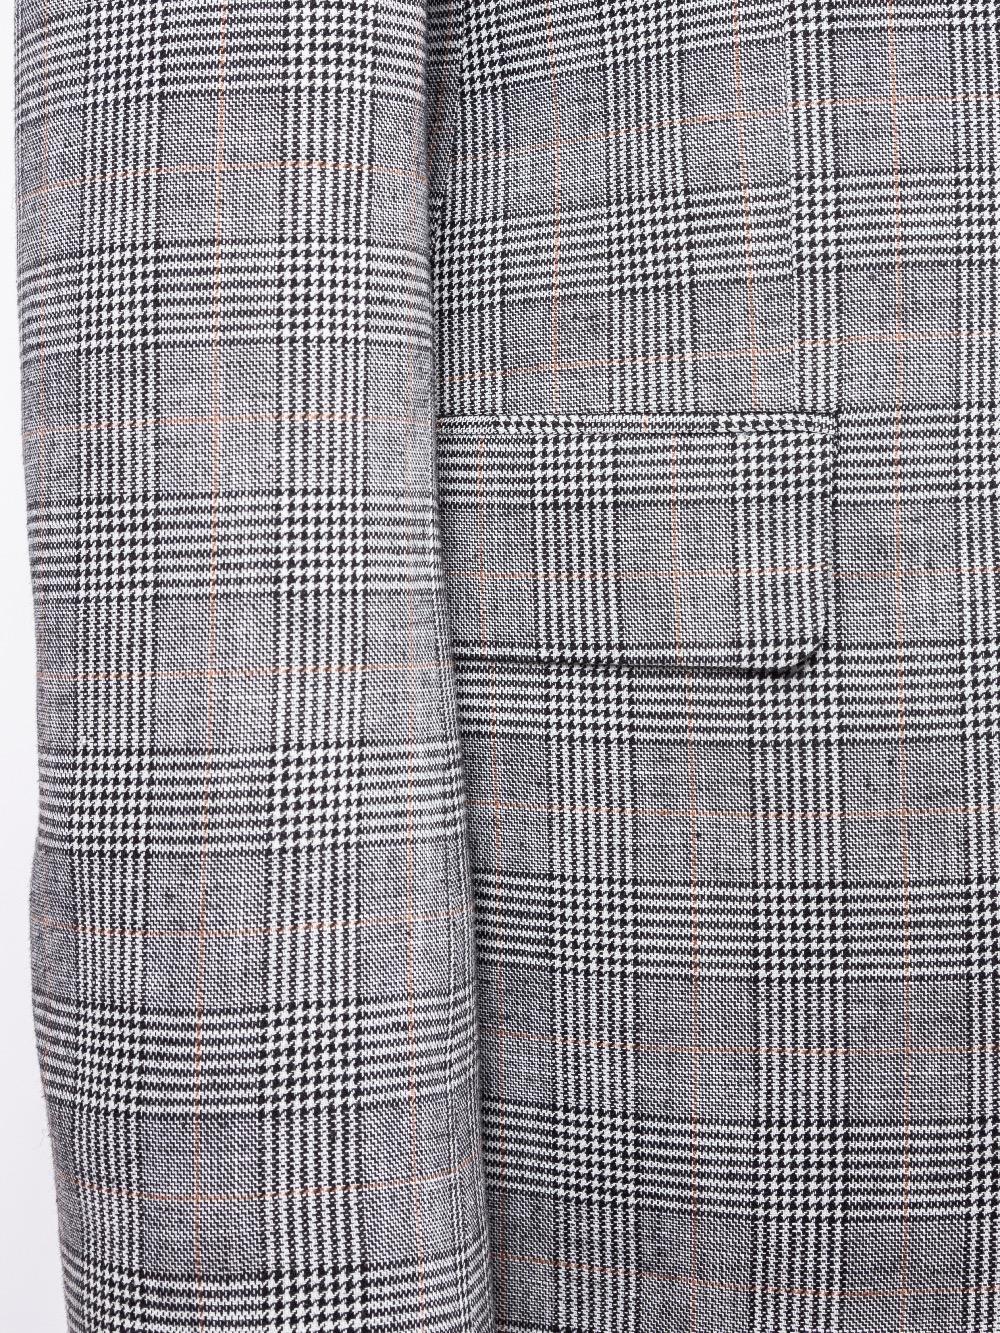 Cory Grey Set Blazer Linen Suit